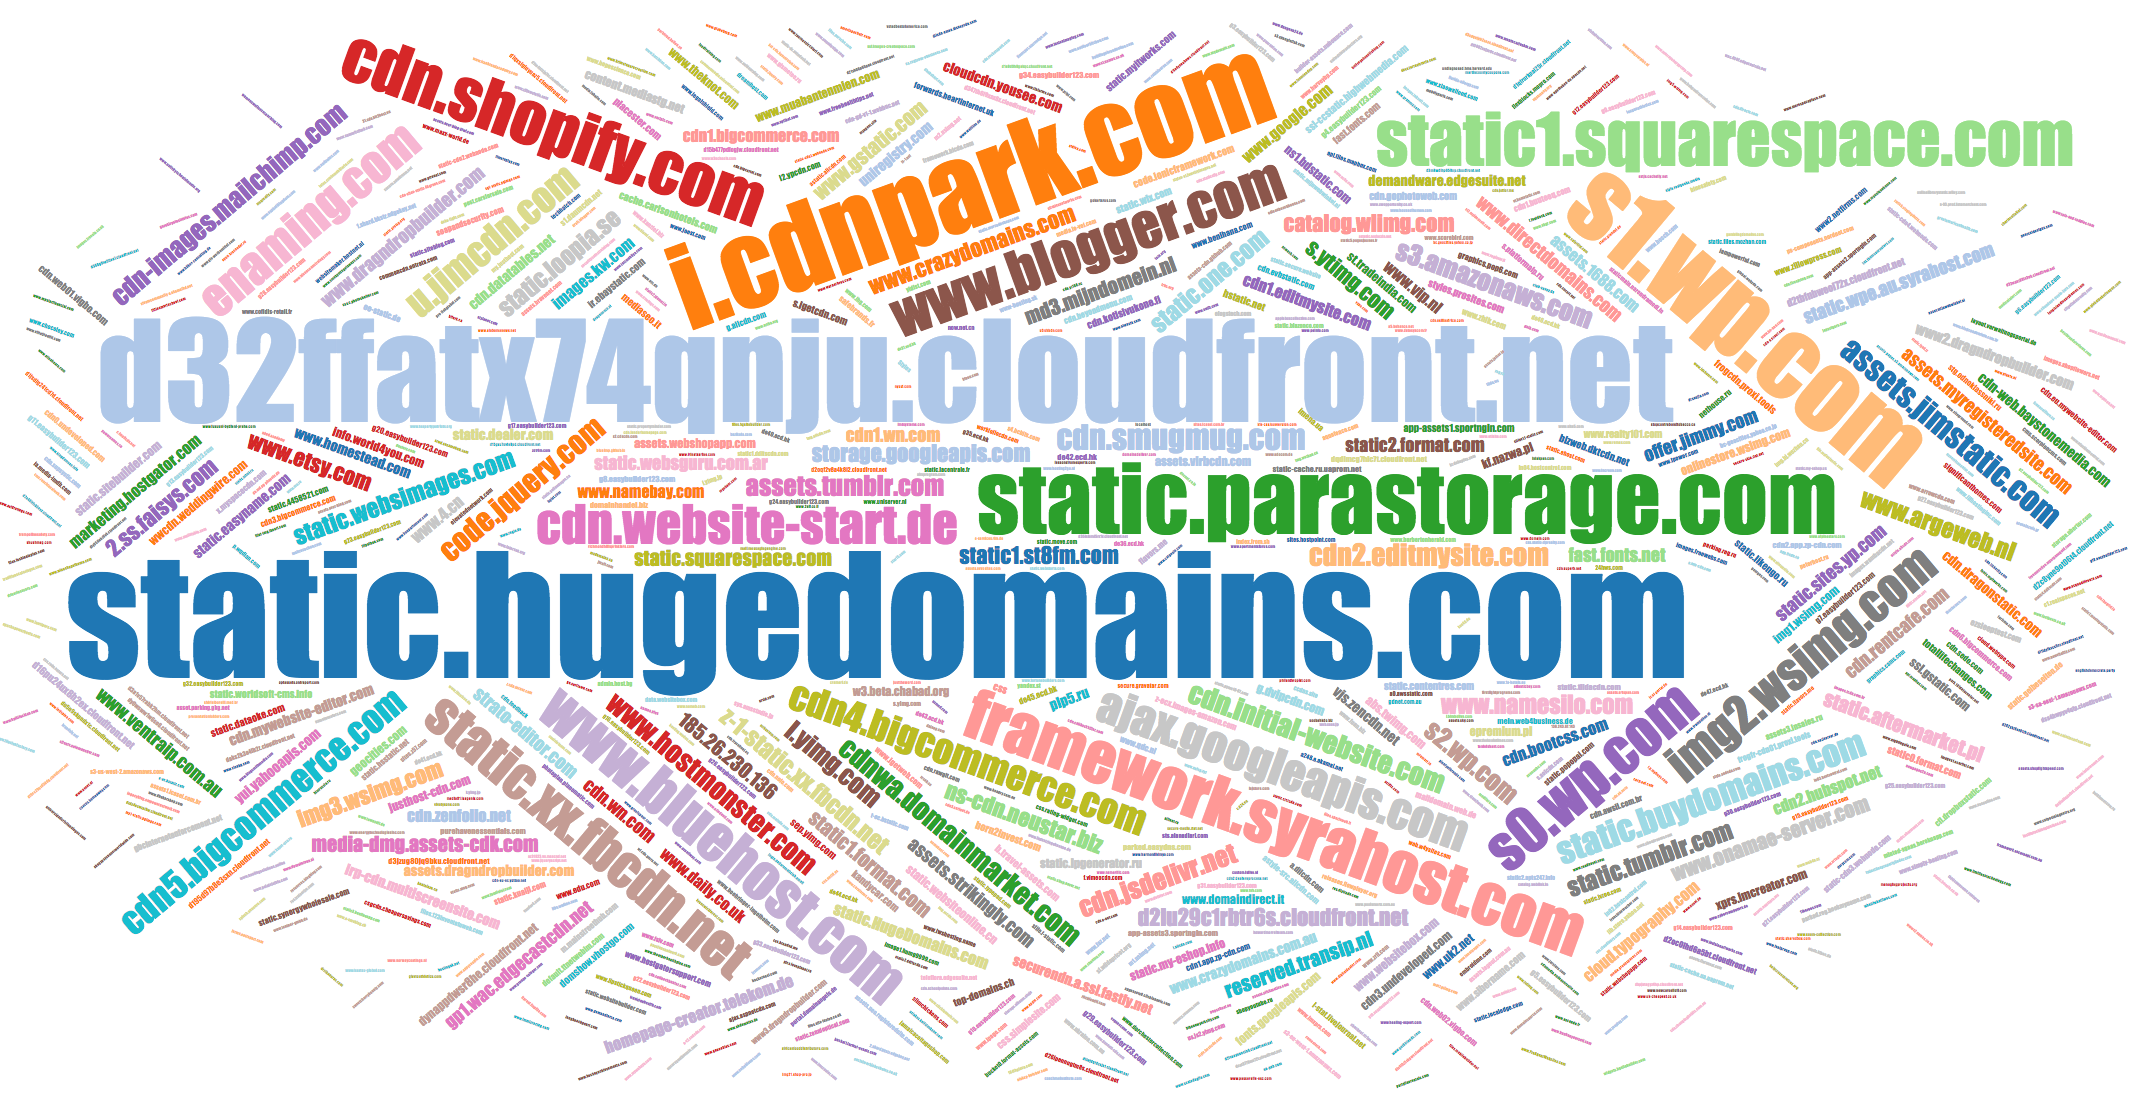 Popular names of CSS domains qtaaabbbzy1.mydcfe.com, que.com, etc.